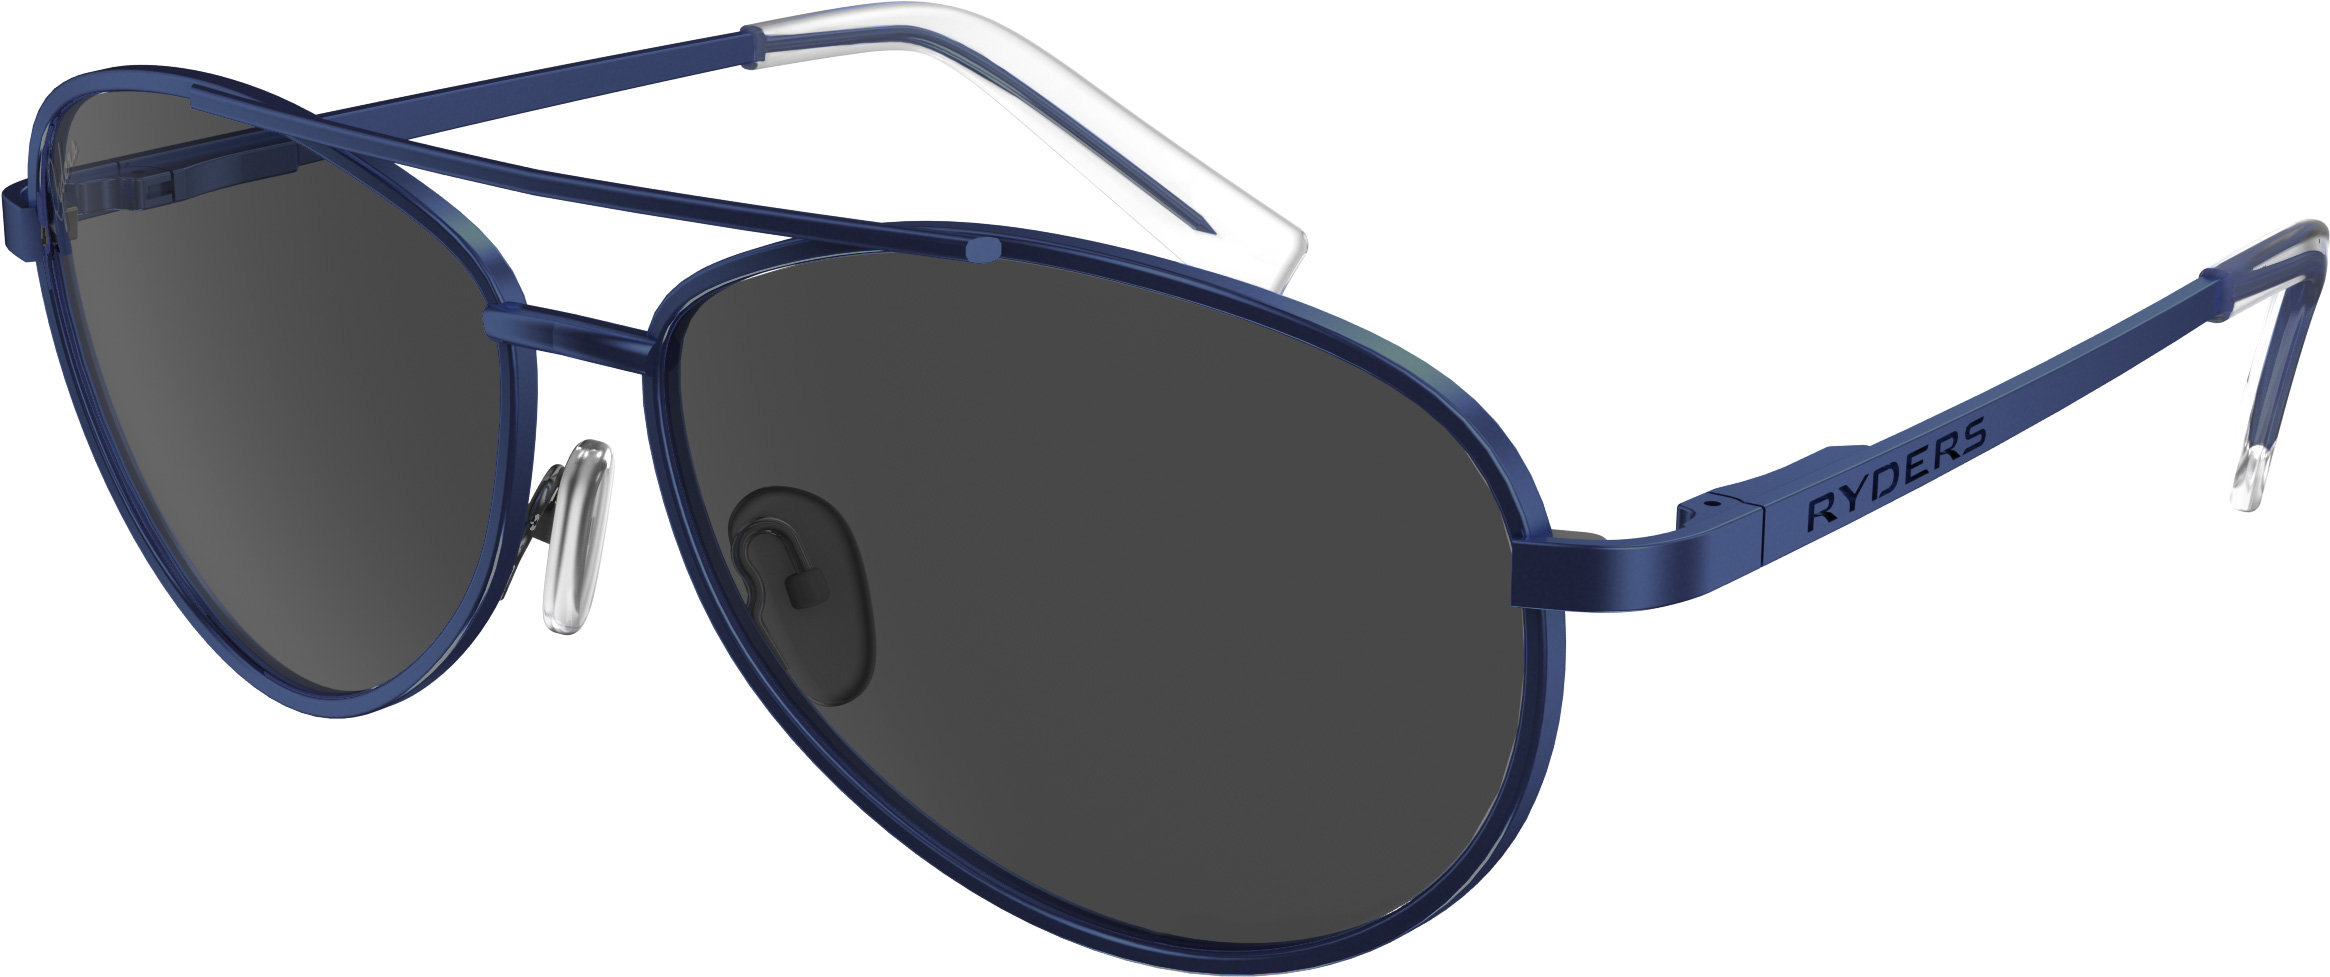 Ryders Eyewear Corsair Standard Sunglasses Chrome 57 mm R897-001 